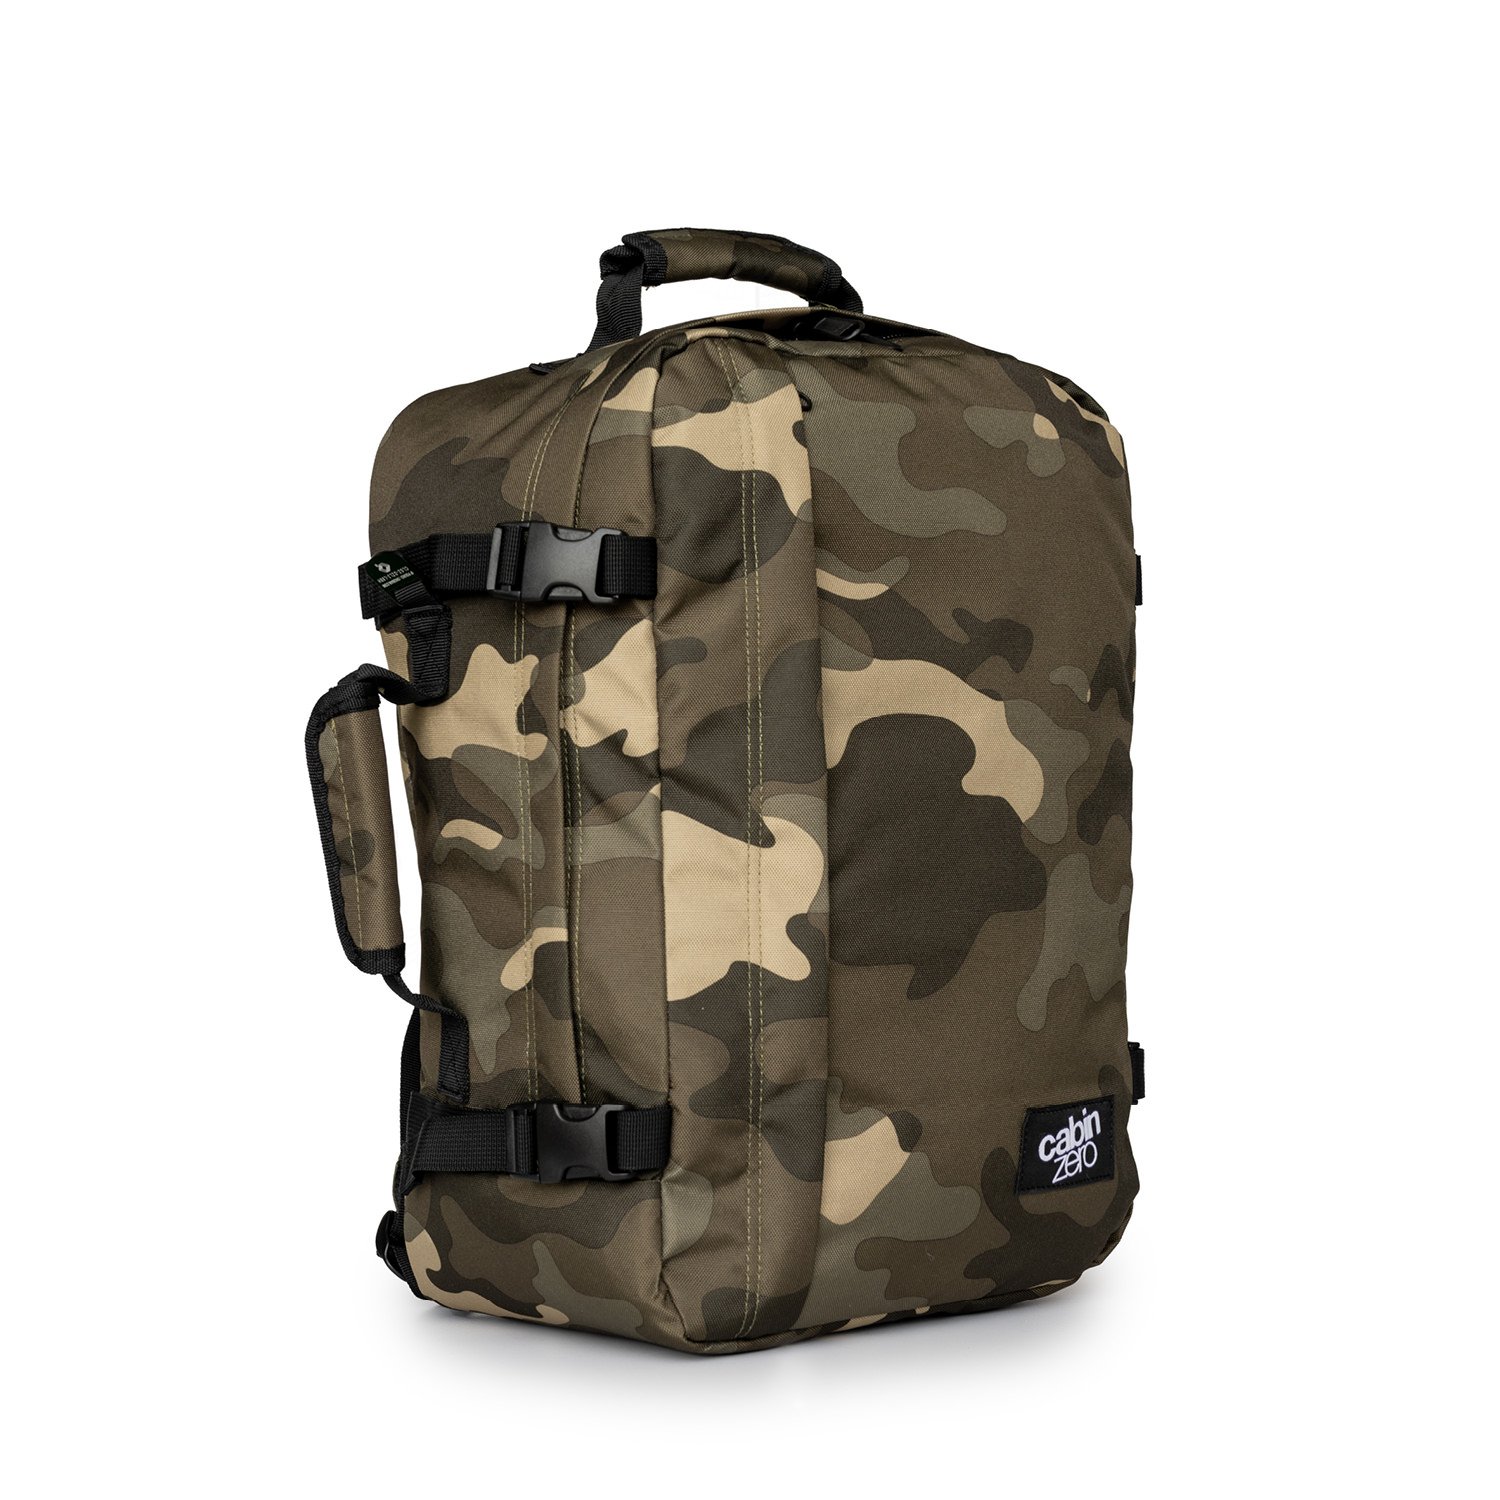 CABIN ZERO Classic Backpack 36L